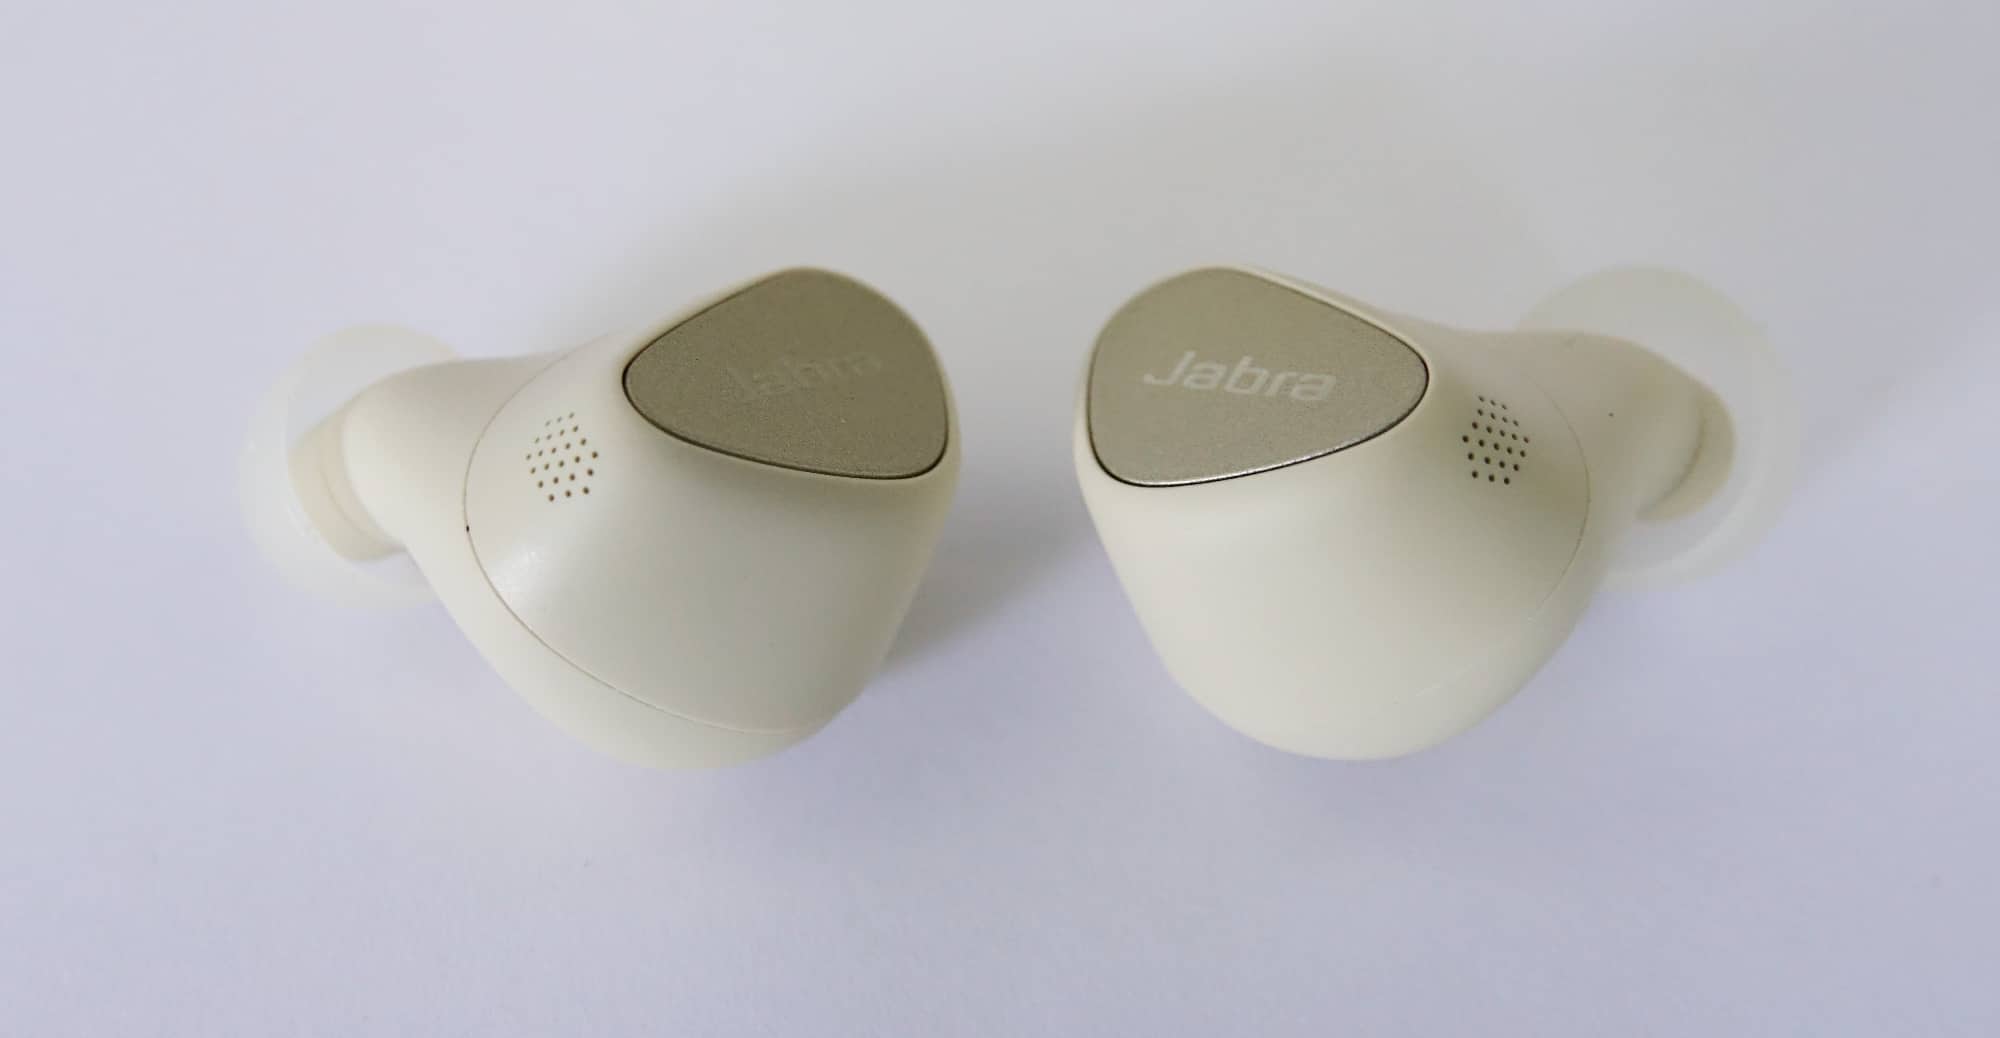 Jabra Elite 5 - Gold Beige True Wireless Earbuds : Target